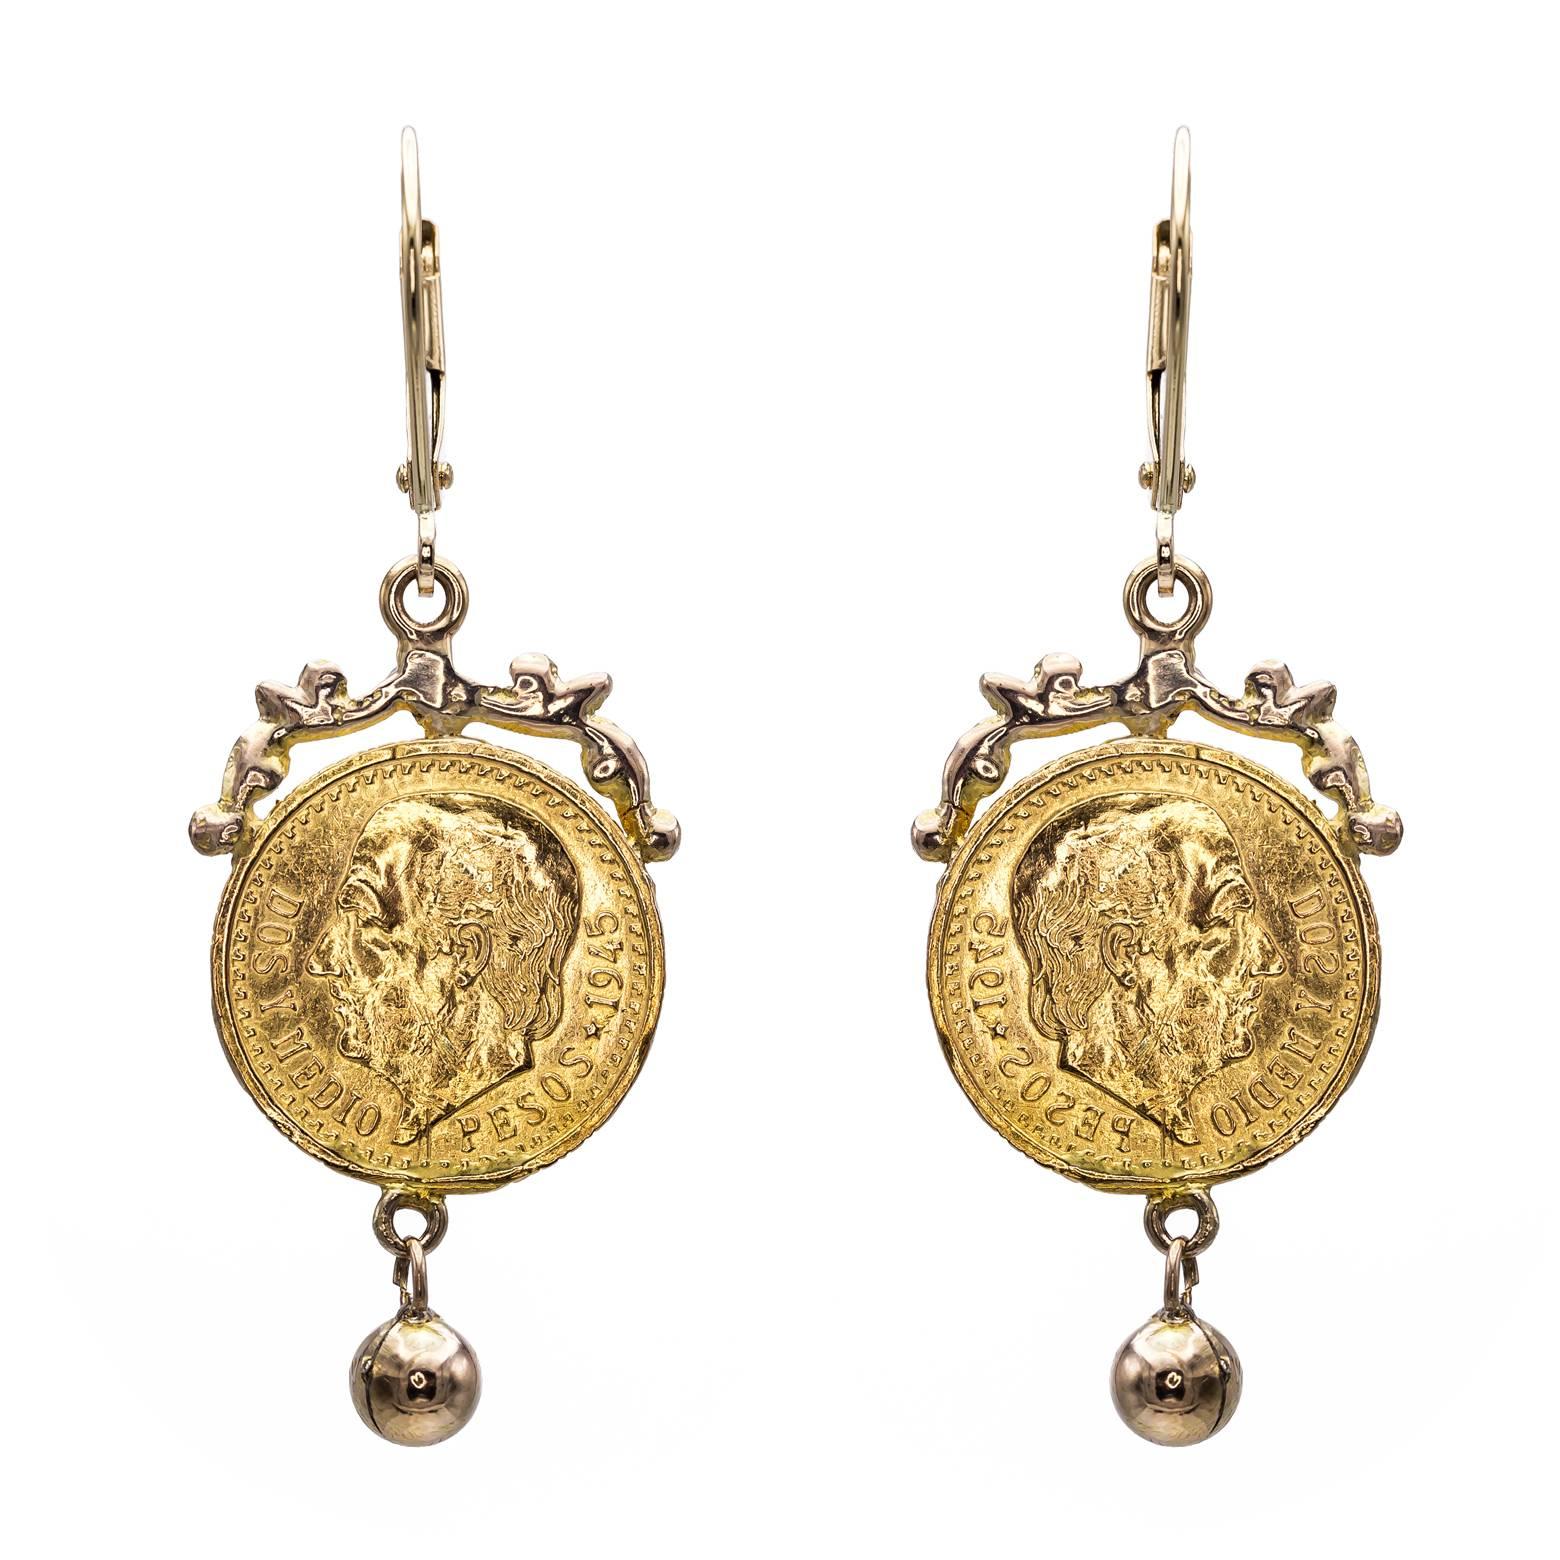 22 Karat Gold Coin Drop Earrings with 14 Karat Gold Embellishment